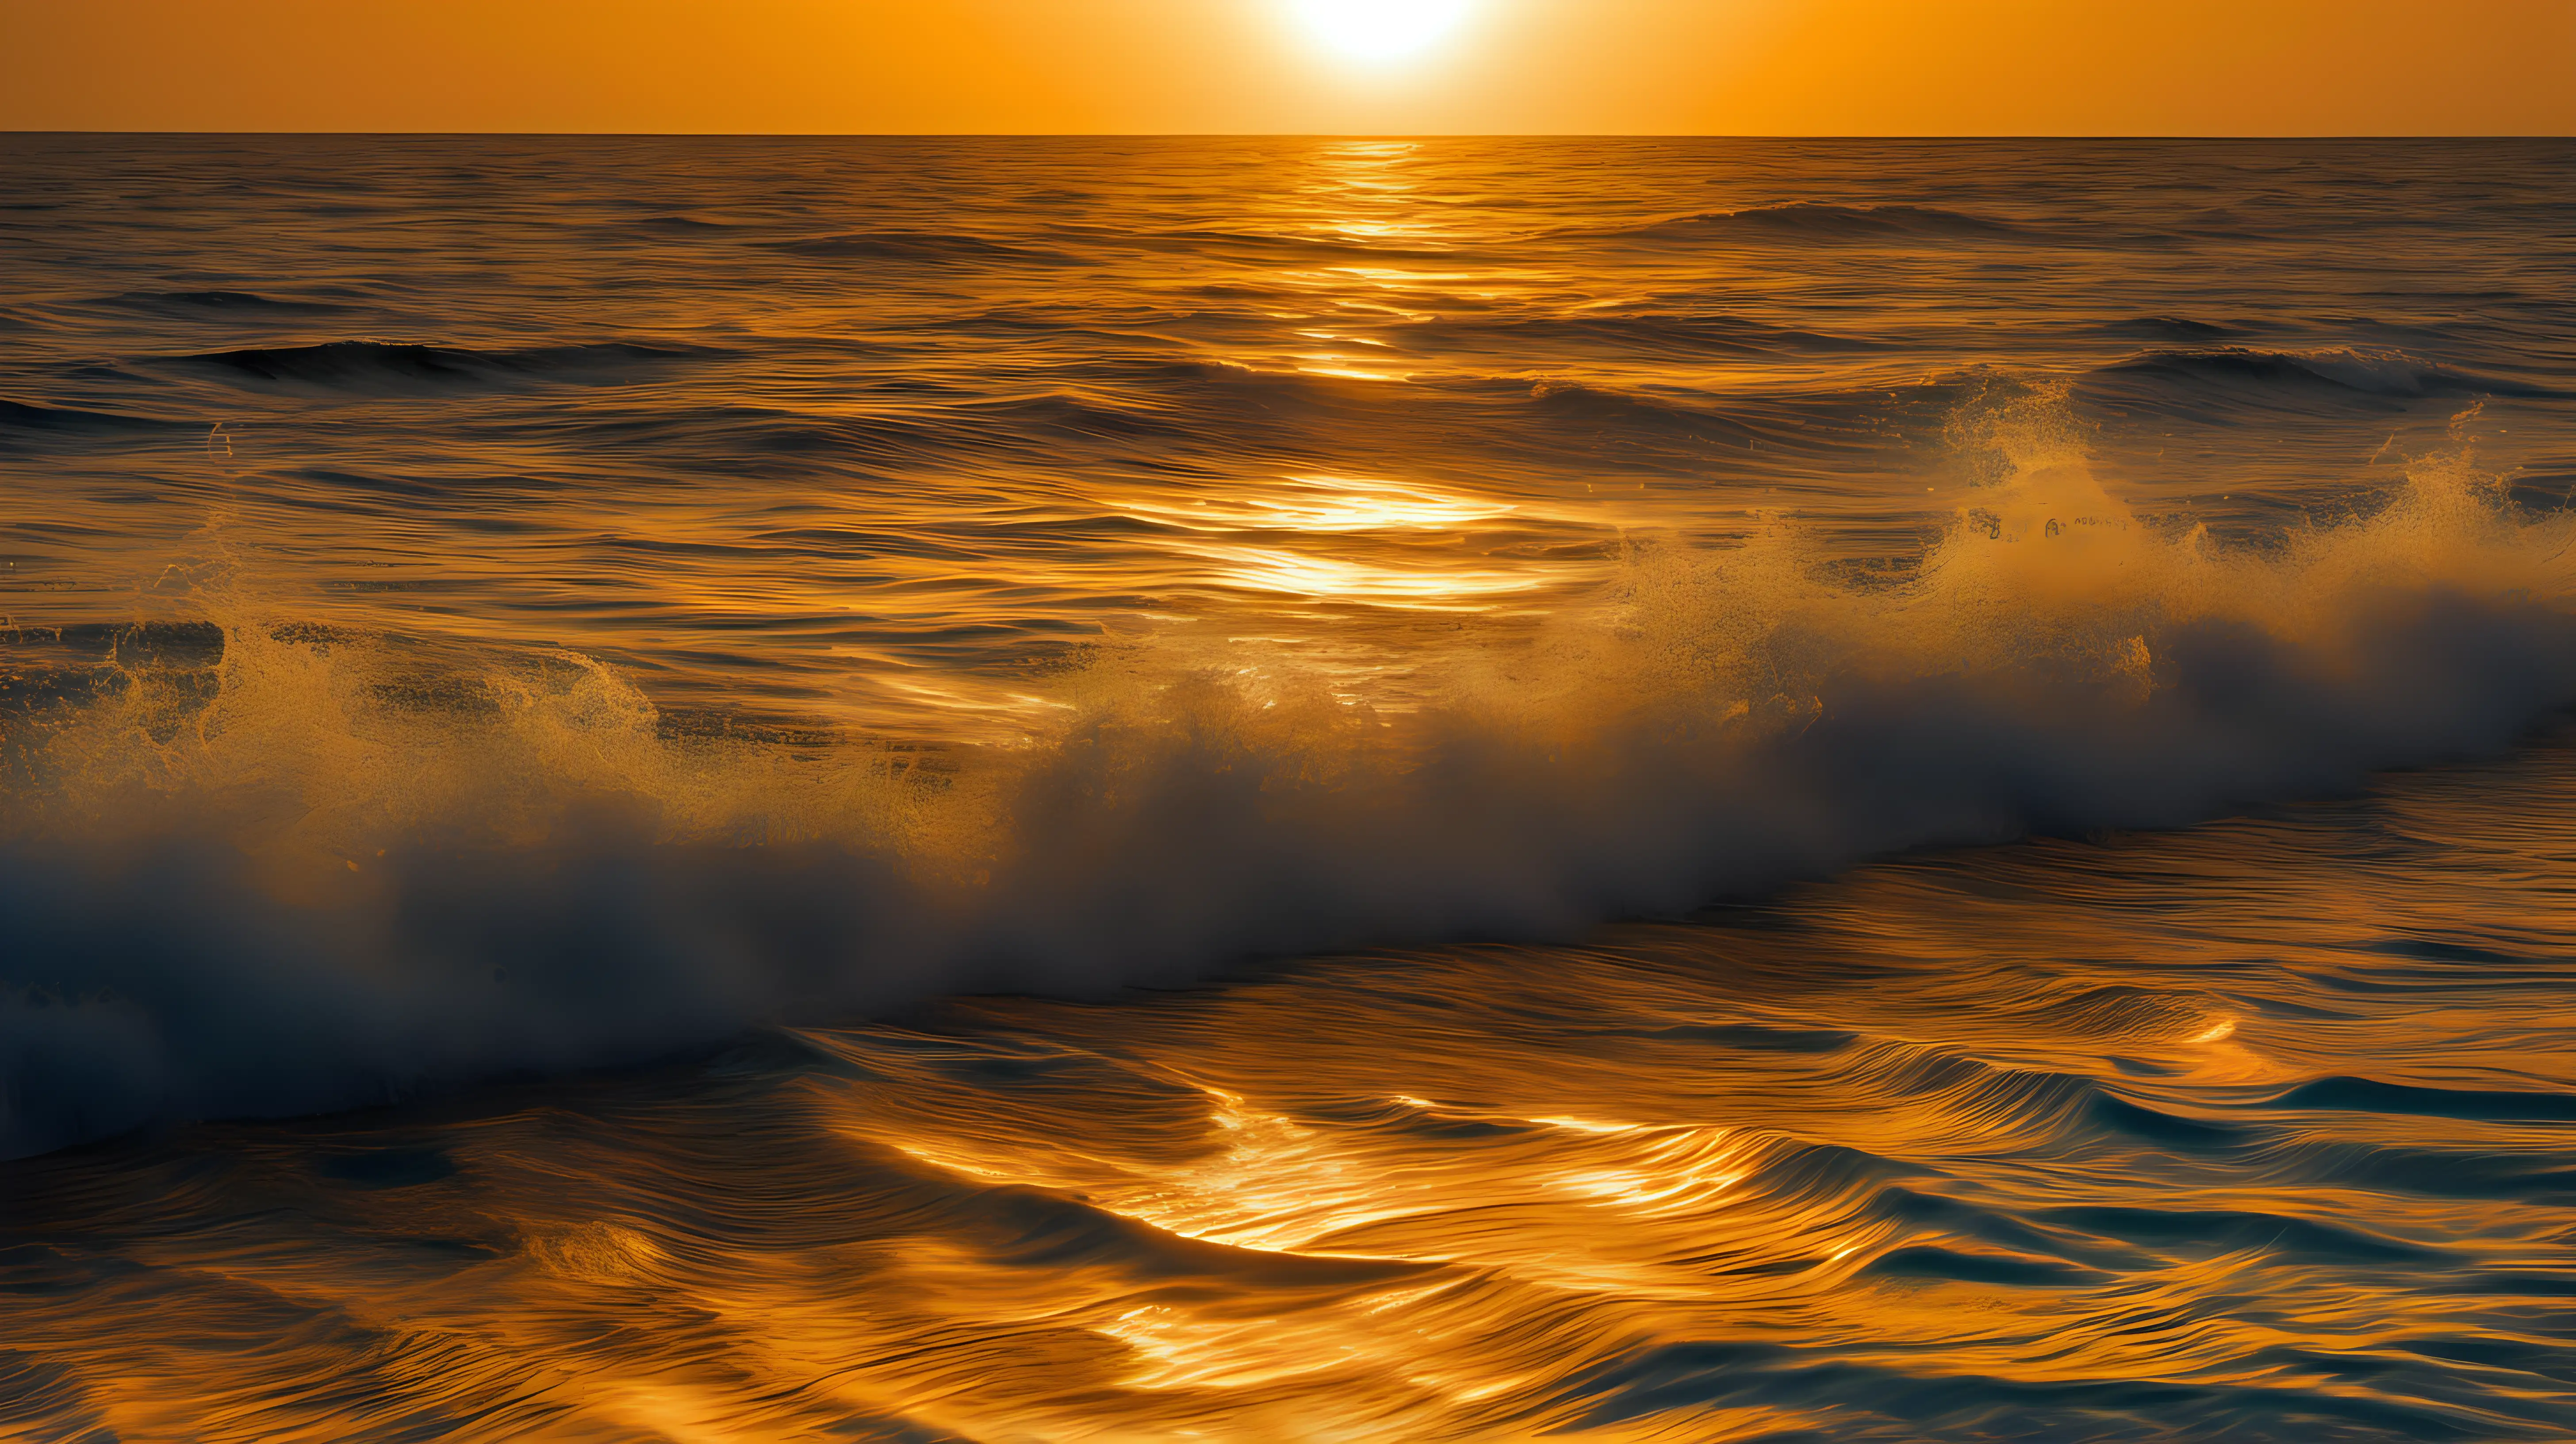 Golden Sunset Reflections on Endless Ocean Waves